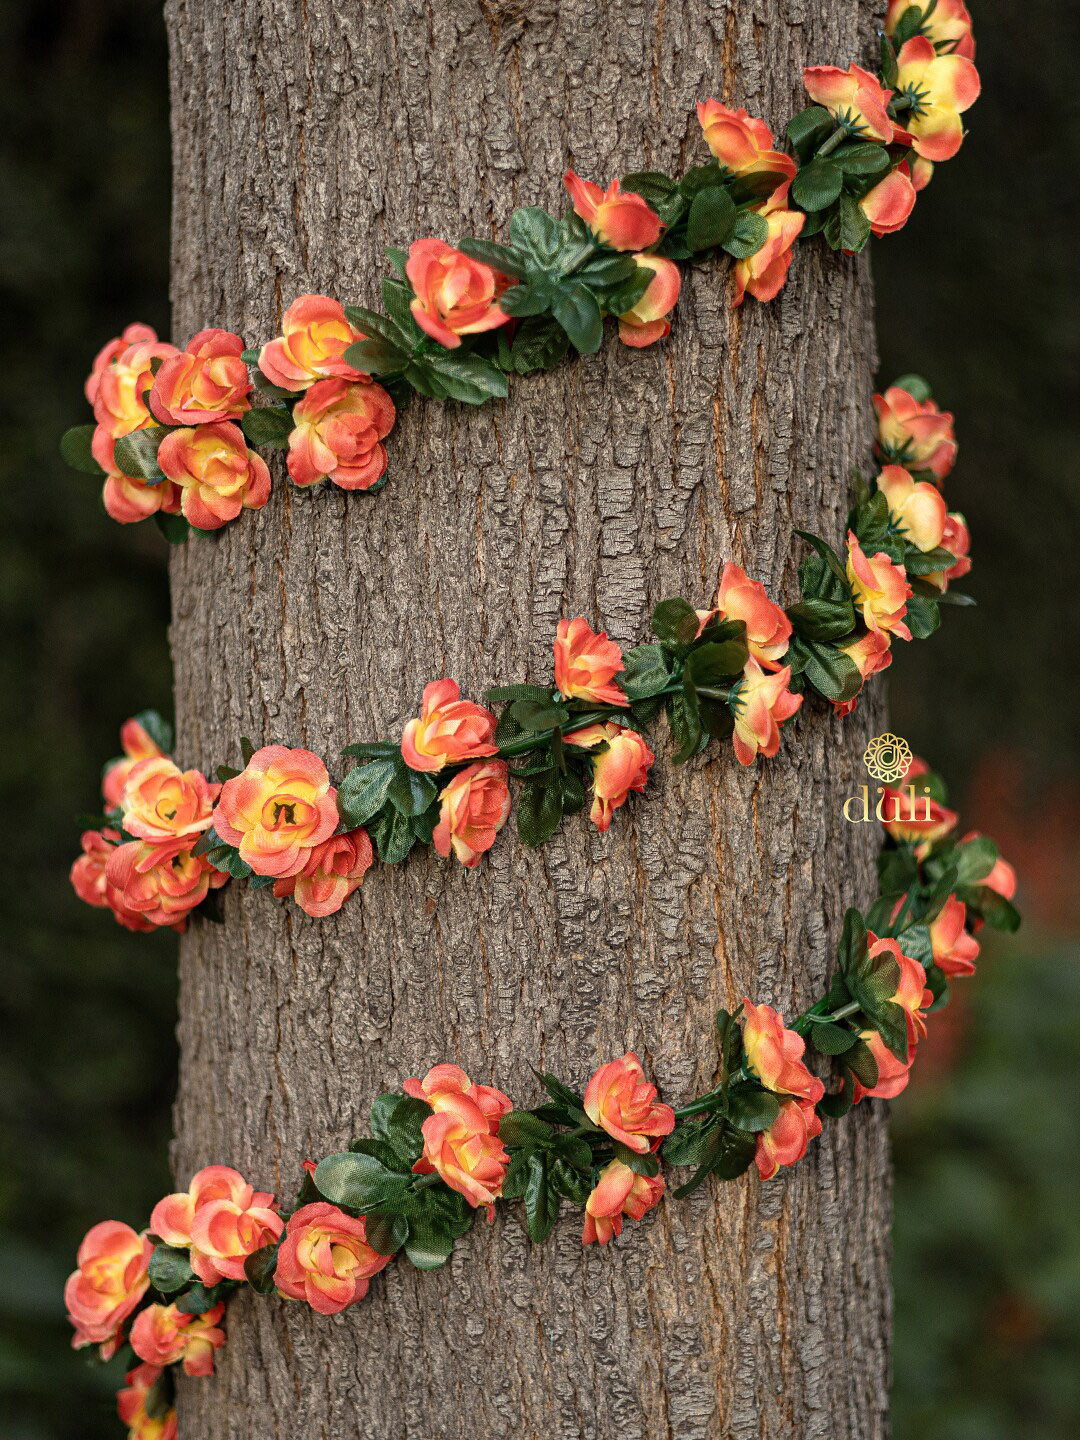 DULI Unisex Orange & Green Rose Artificial Flower Creeper Price in India